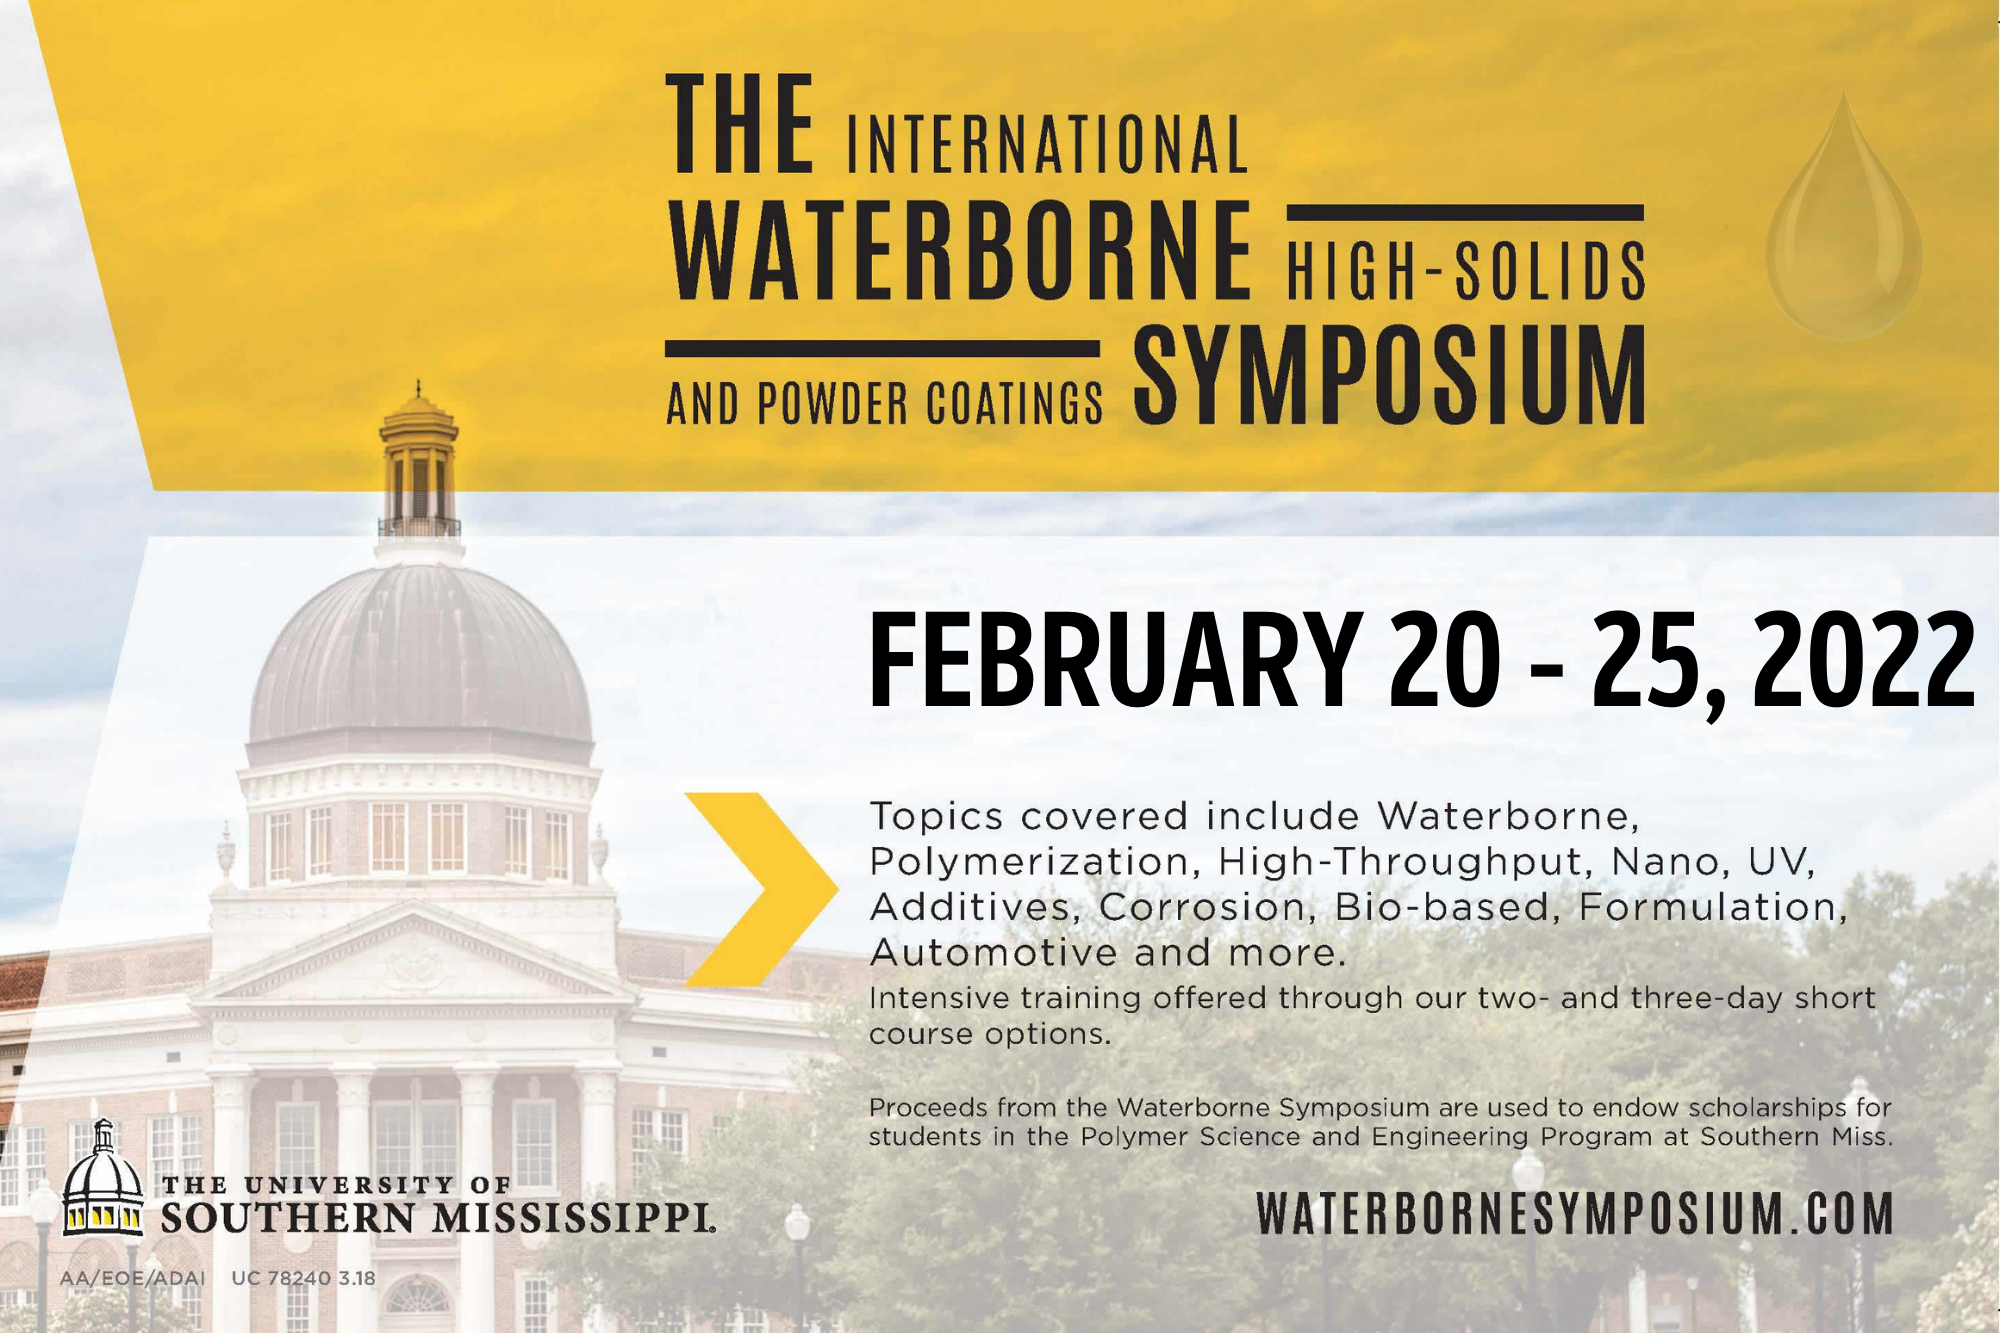 Advertisement for the 2022 Waterborne Symposium